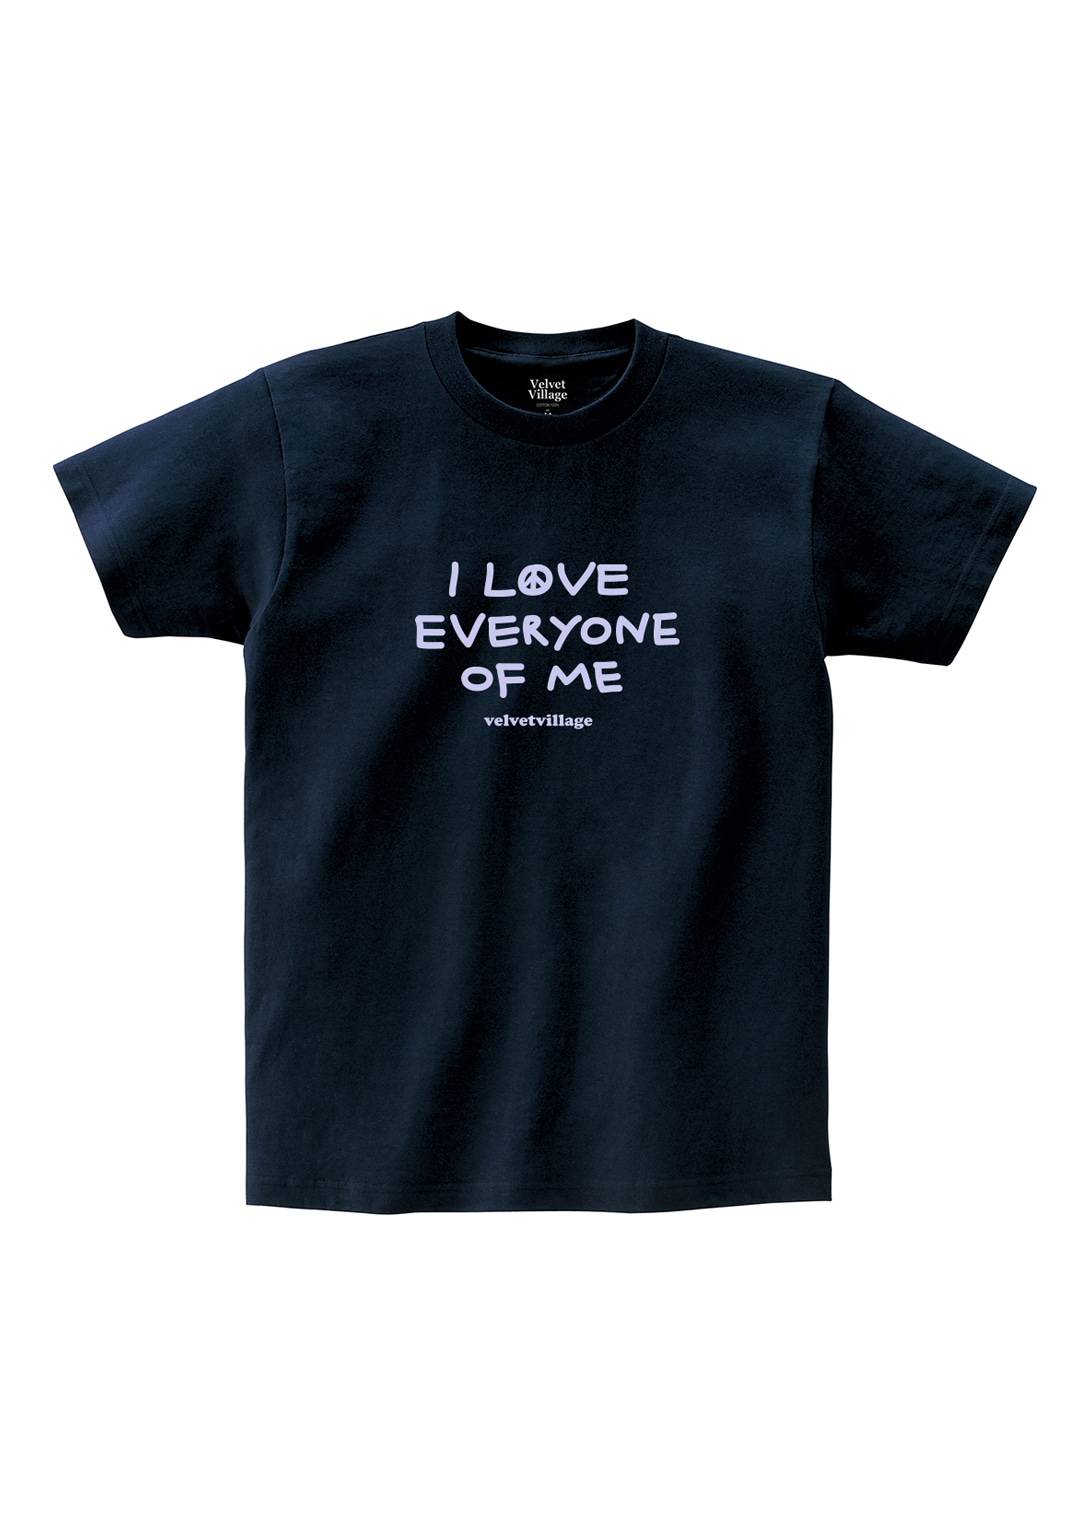 I Love everyone of me T-shirt (Navy)